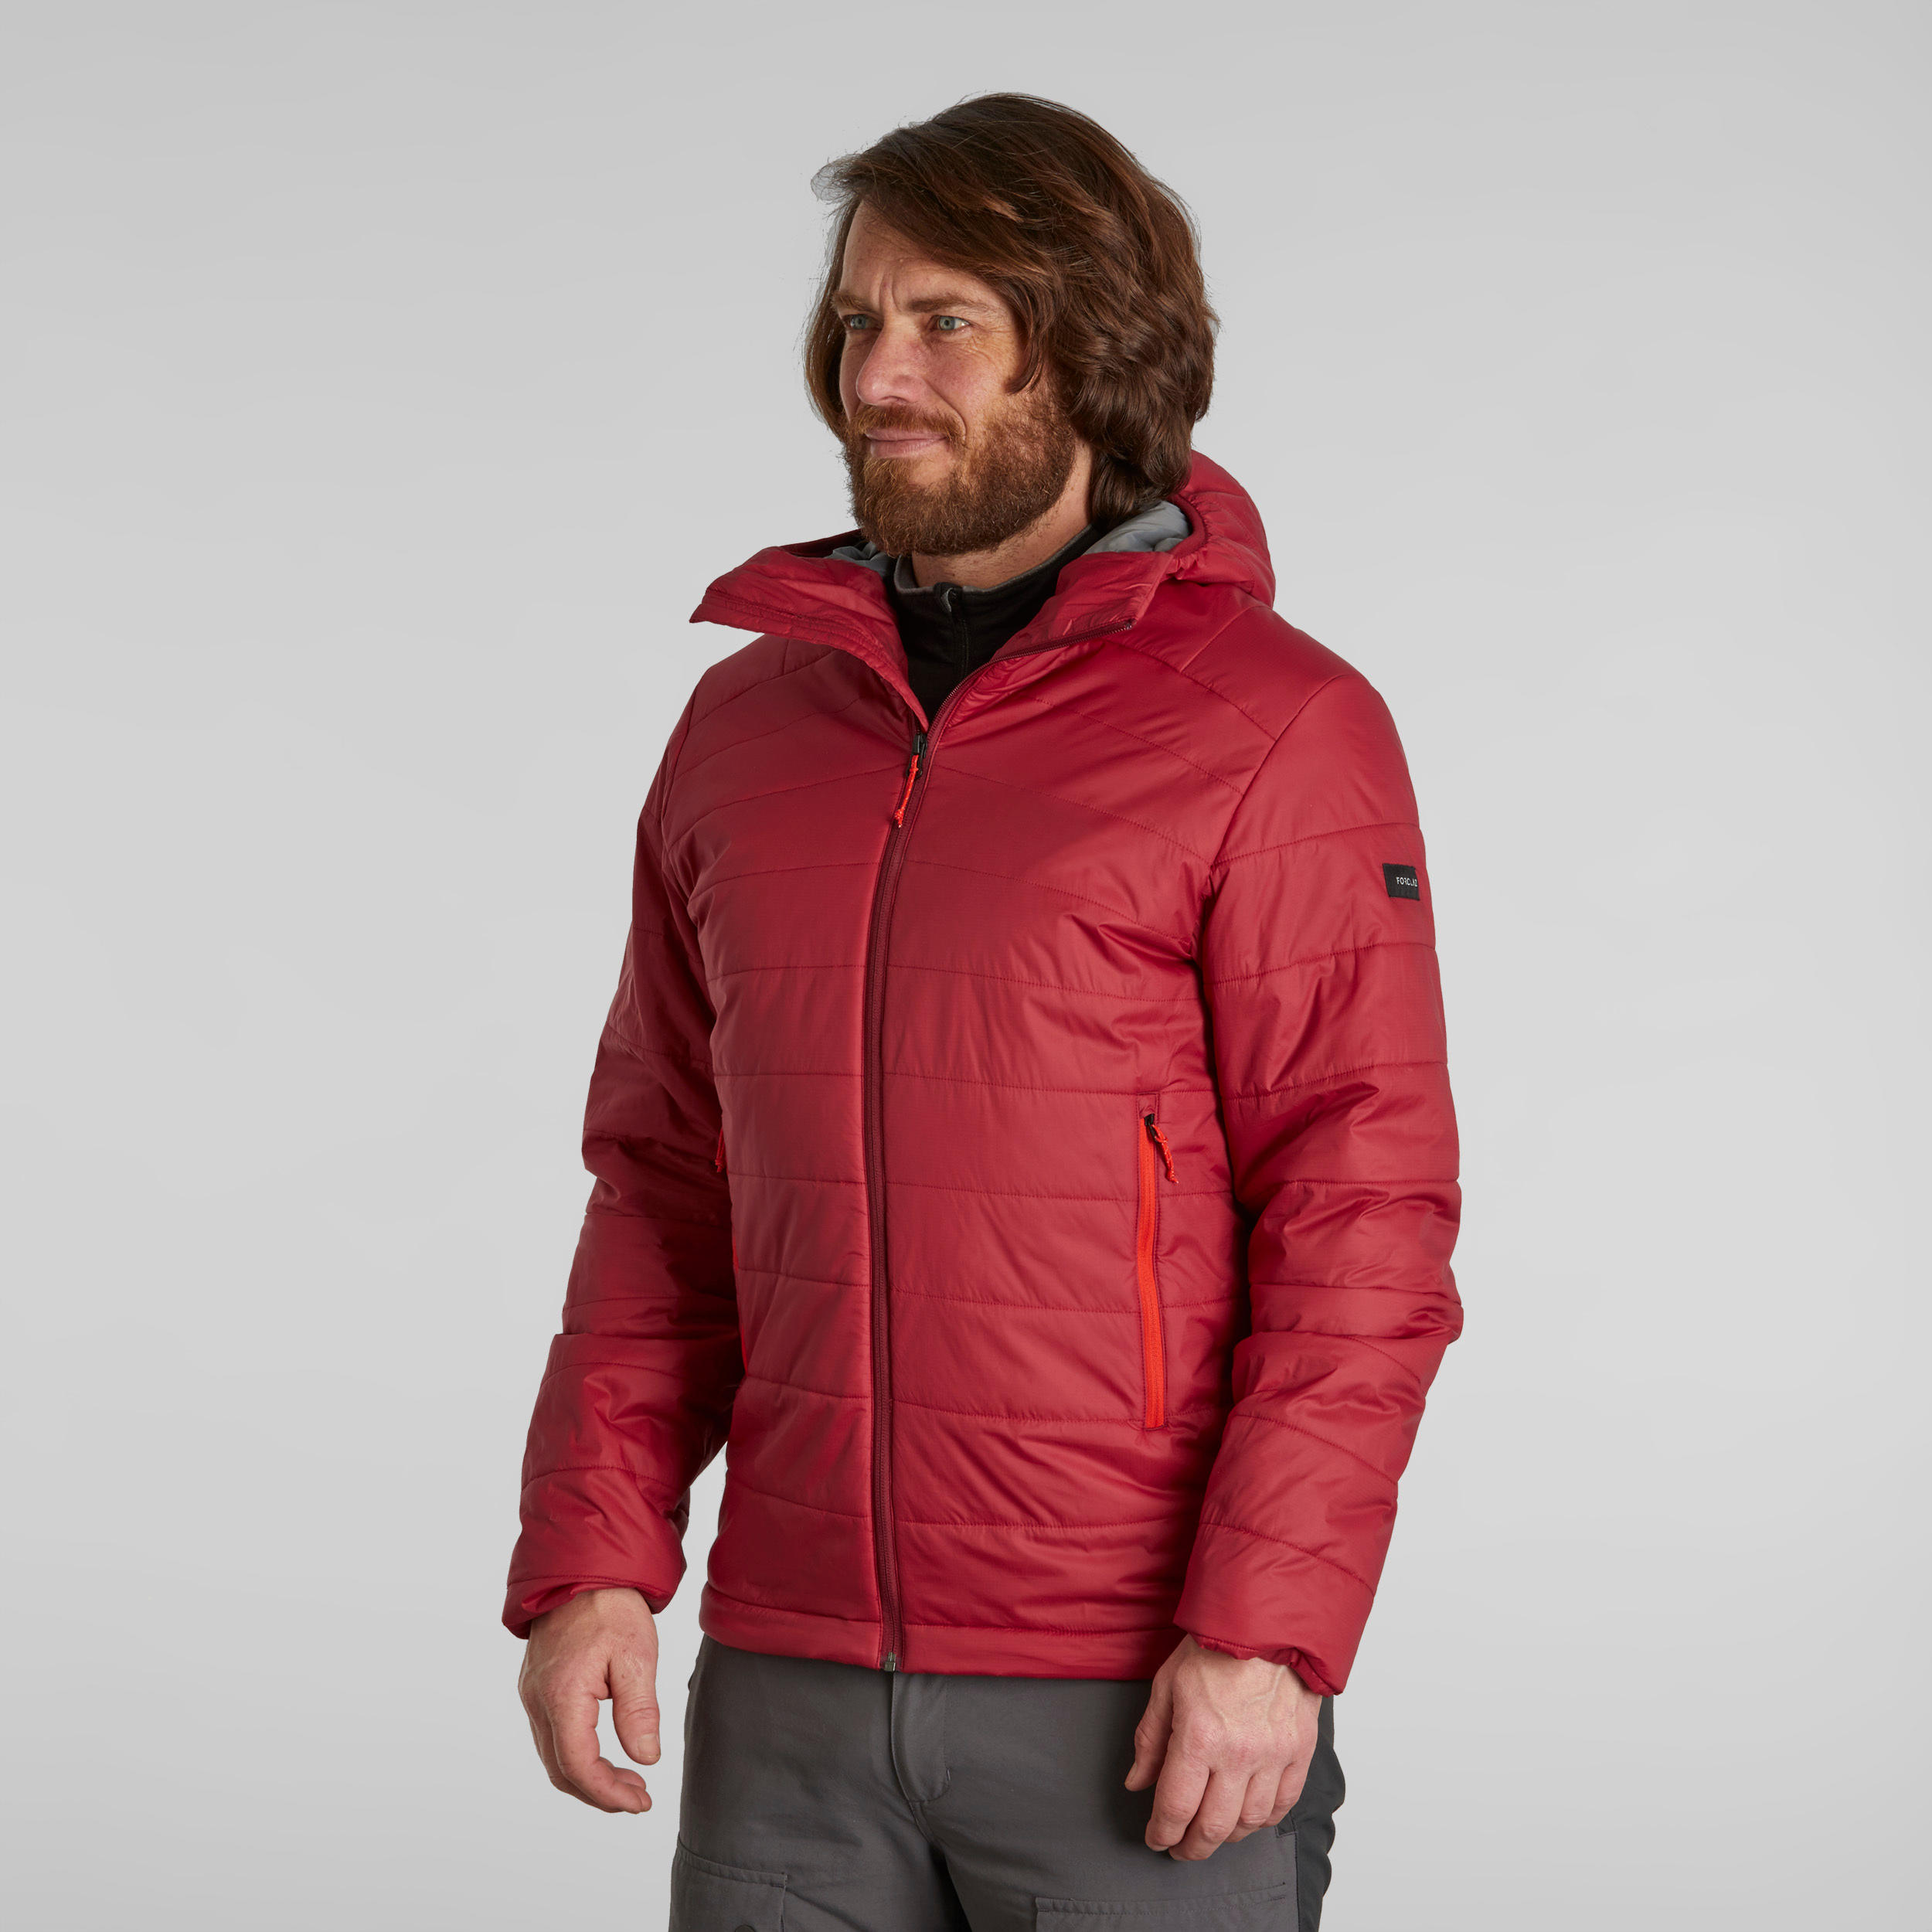 Buy Men's Trekking Down Feather Jacket 5°C Ultra Light And Compact Online |  Decathlon